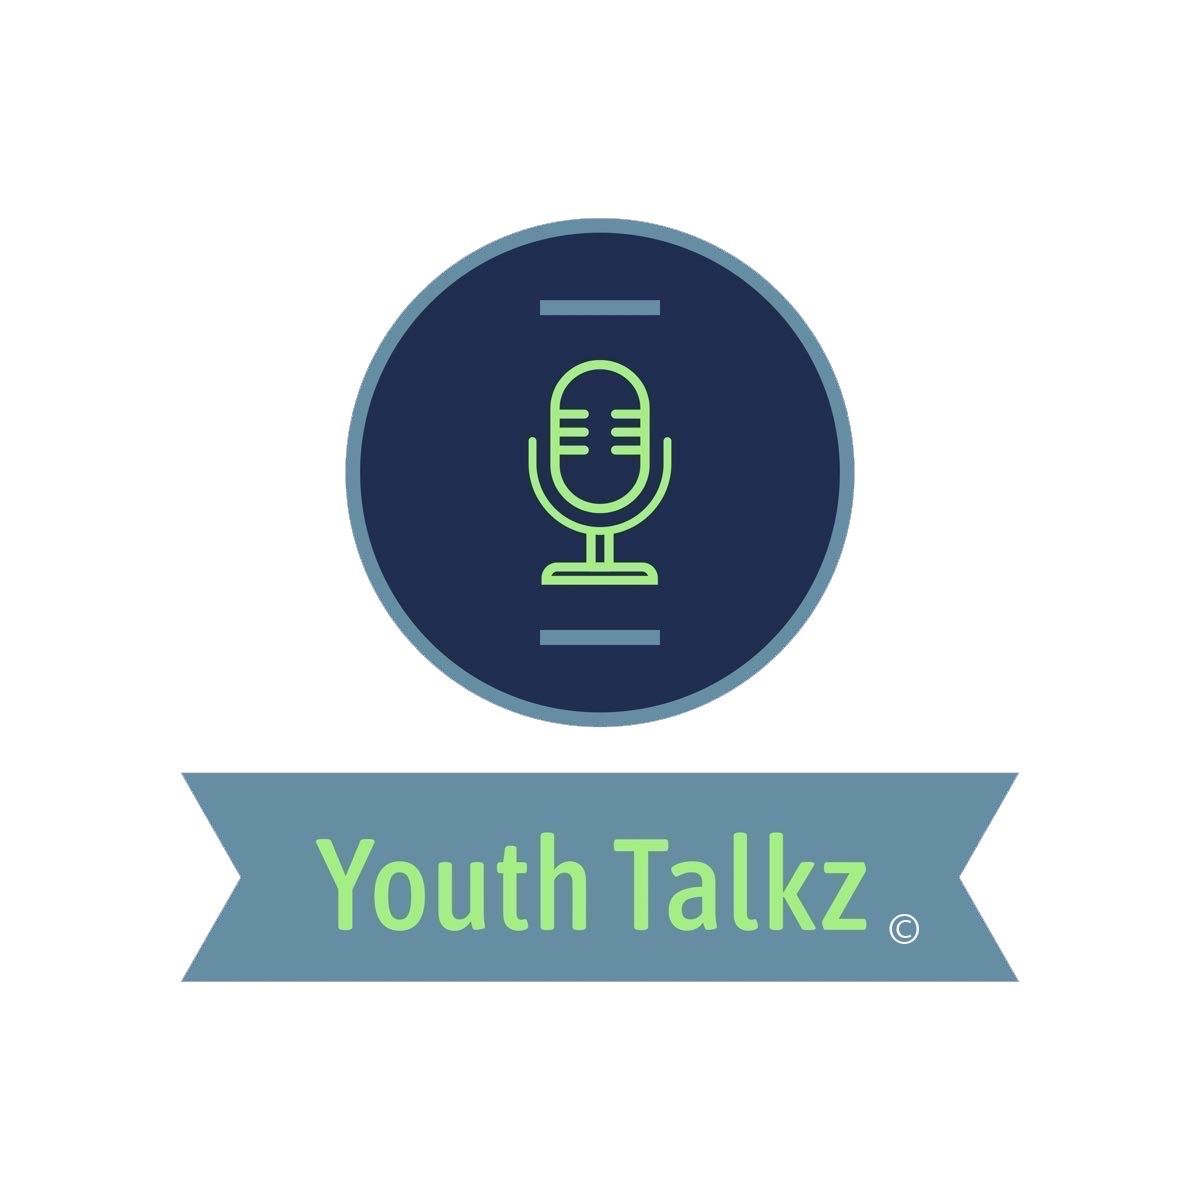 Youth Talkz